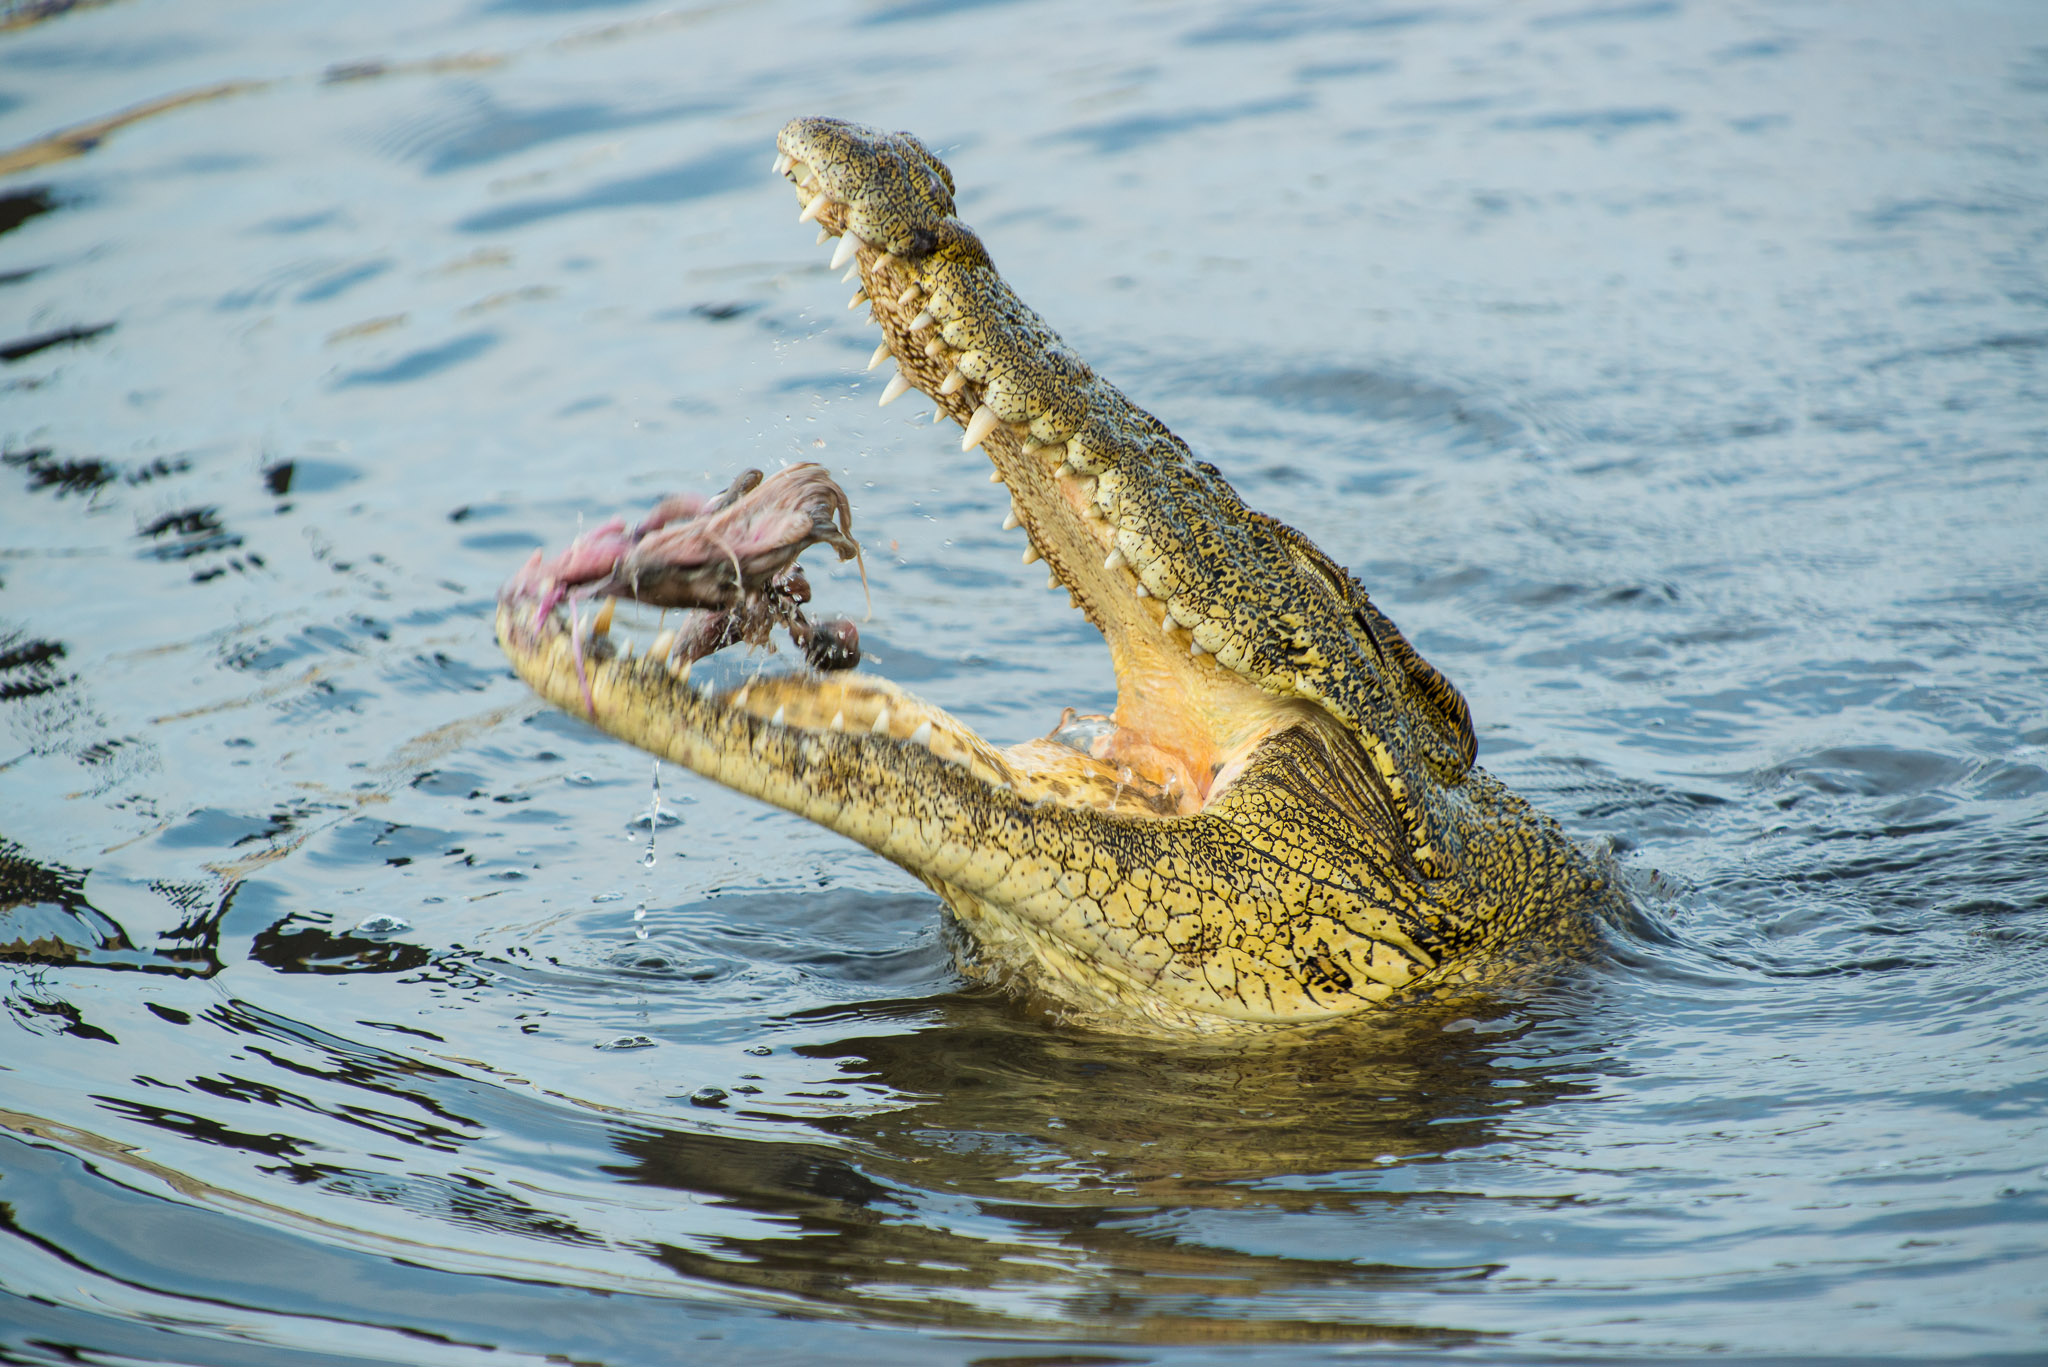 Nile Crocodile, Chobe Riverfront